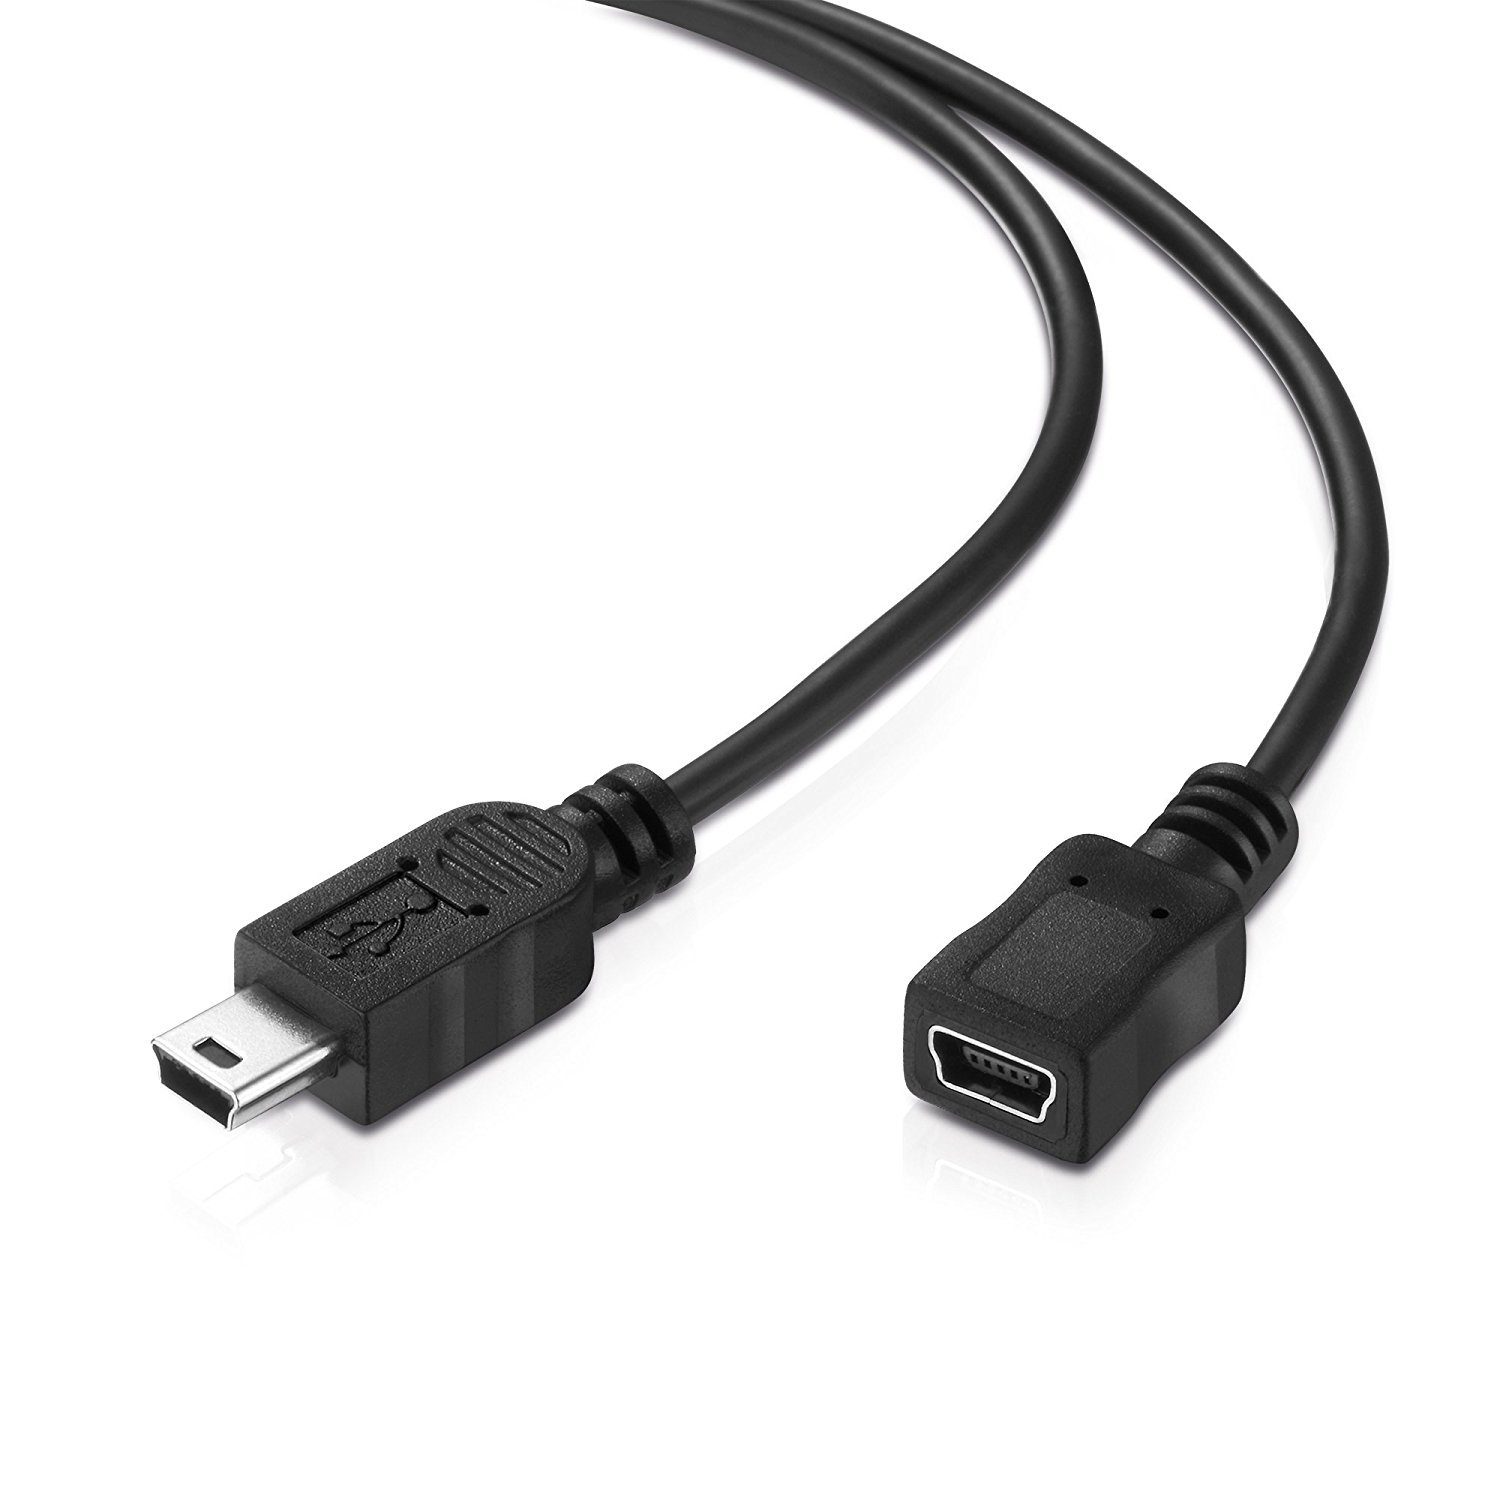 adaptare adaptare 40124 1,2 m Mini-USB 2.0 Verlängerung USB-Kabel